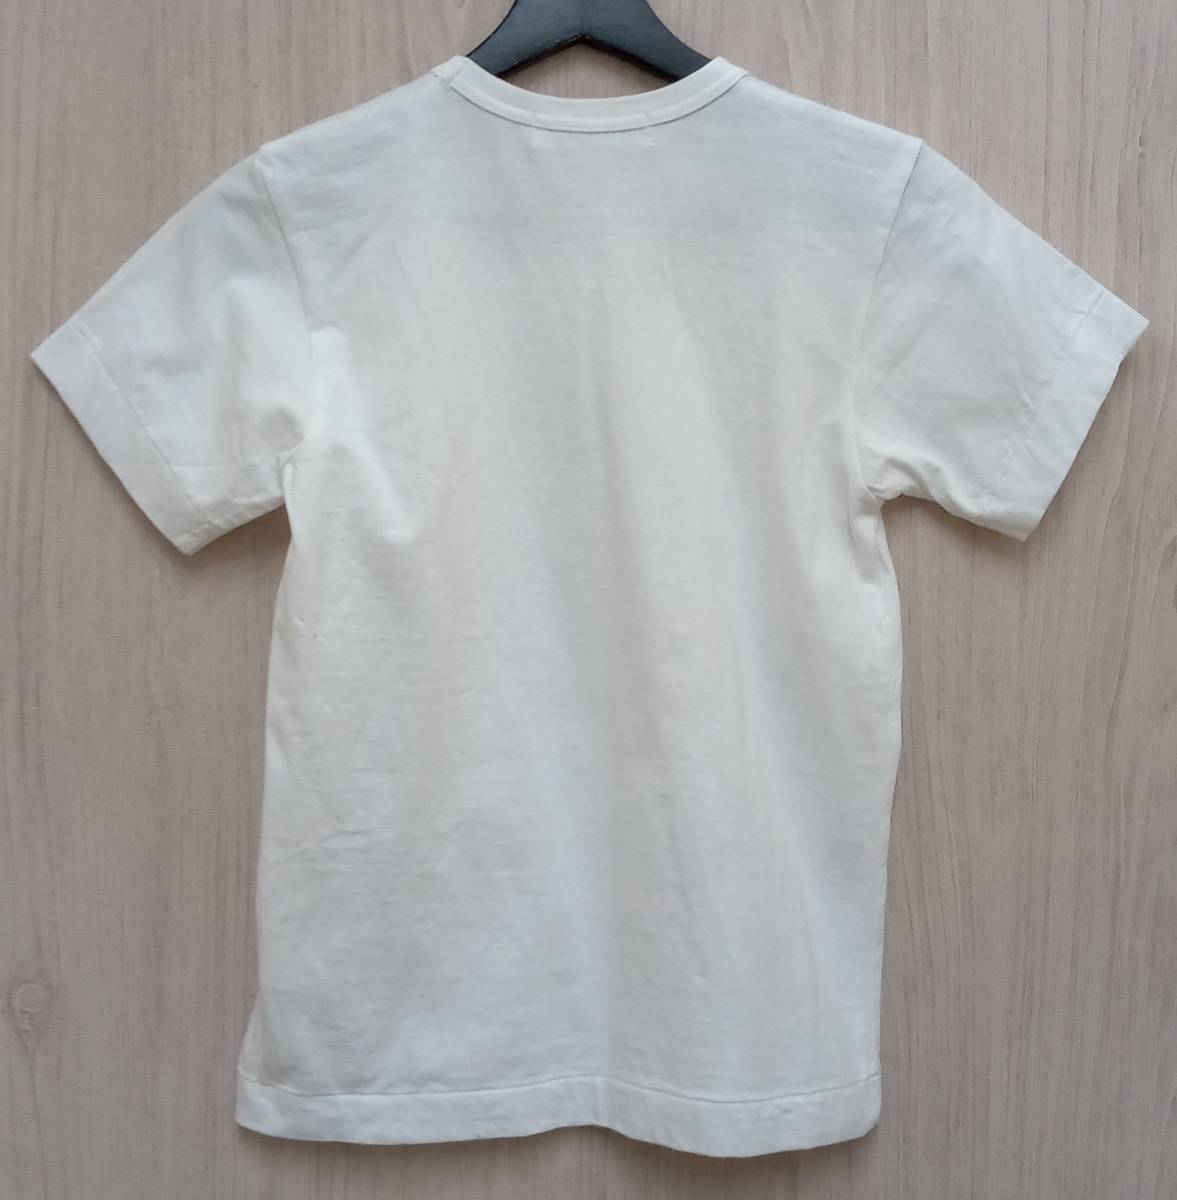 COMME des GARCONS/コムデギャルソン/半袖Tシャツ・カットソー/OT-TO13/ホワイト/Sサイズ_画像2